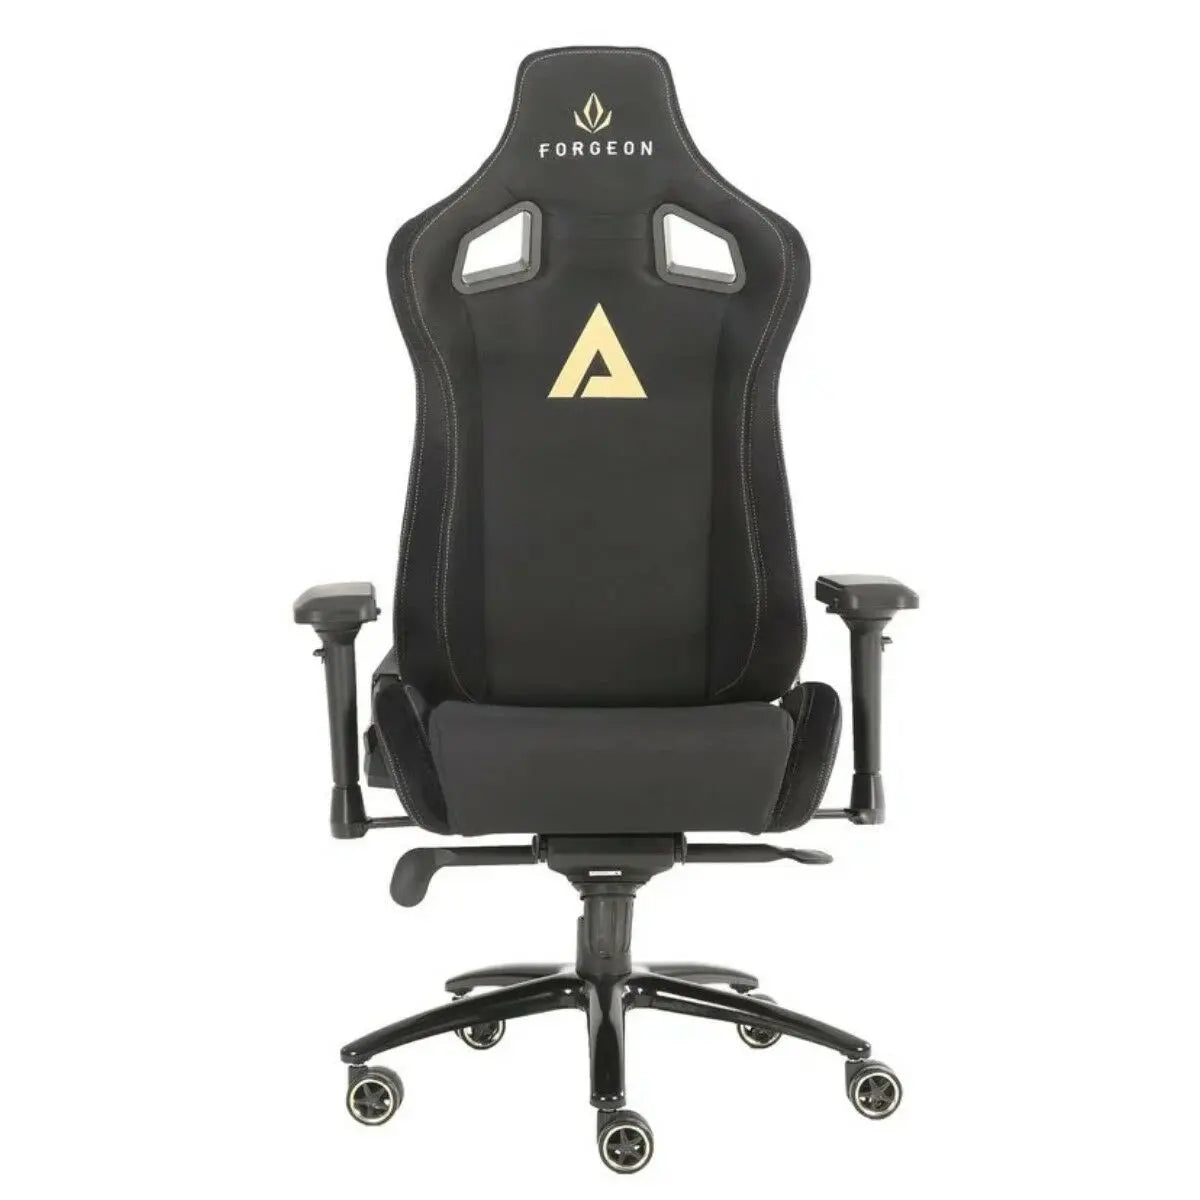 Gaming Chair Forgeon Acrux - IGSI Europe Ltd